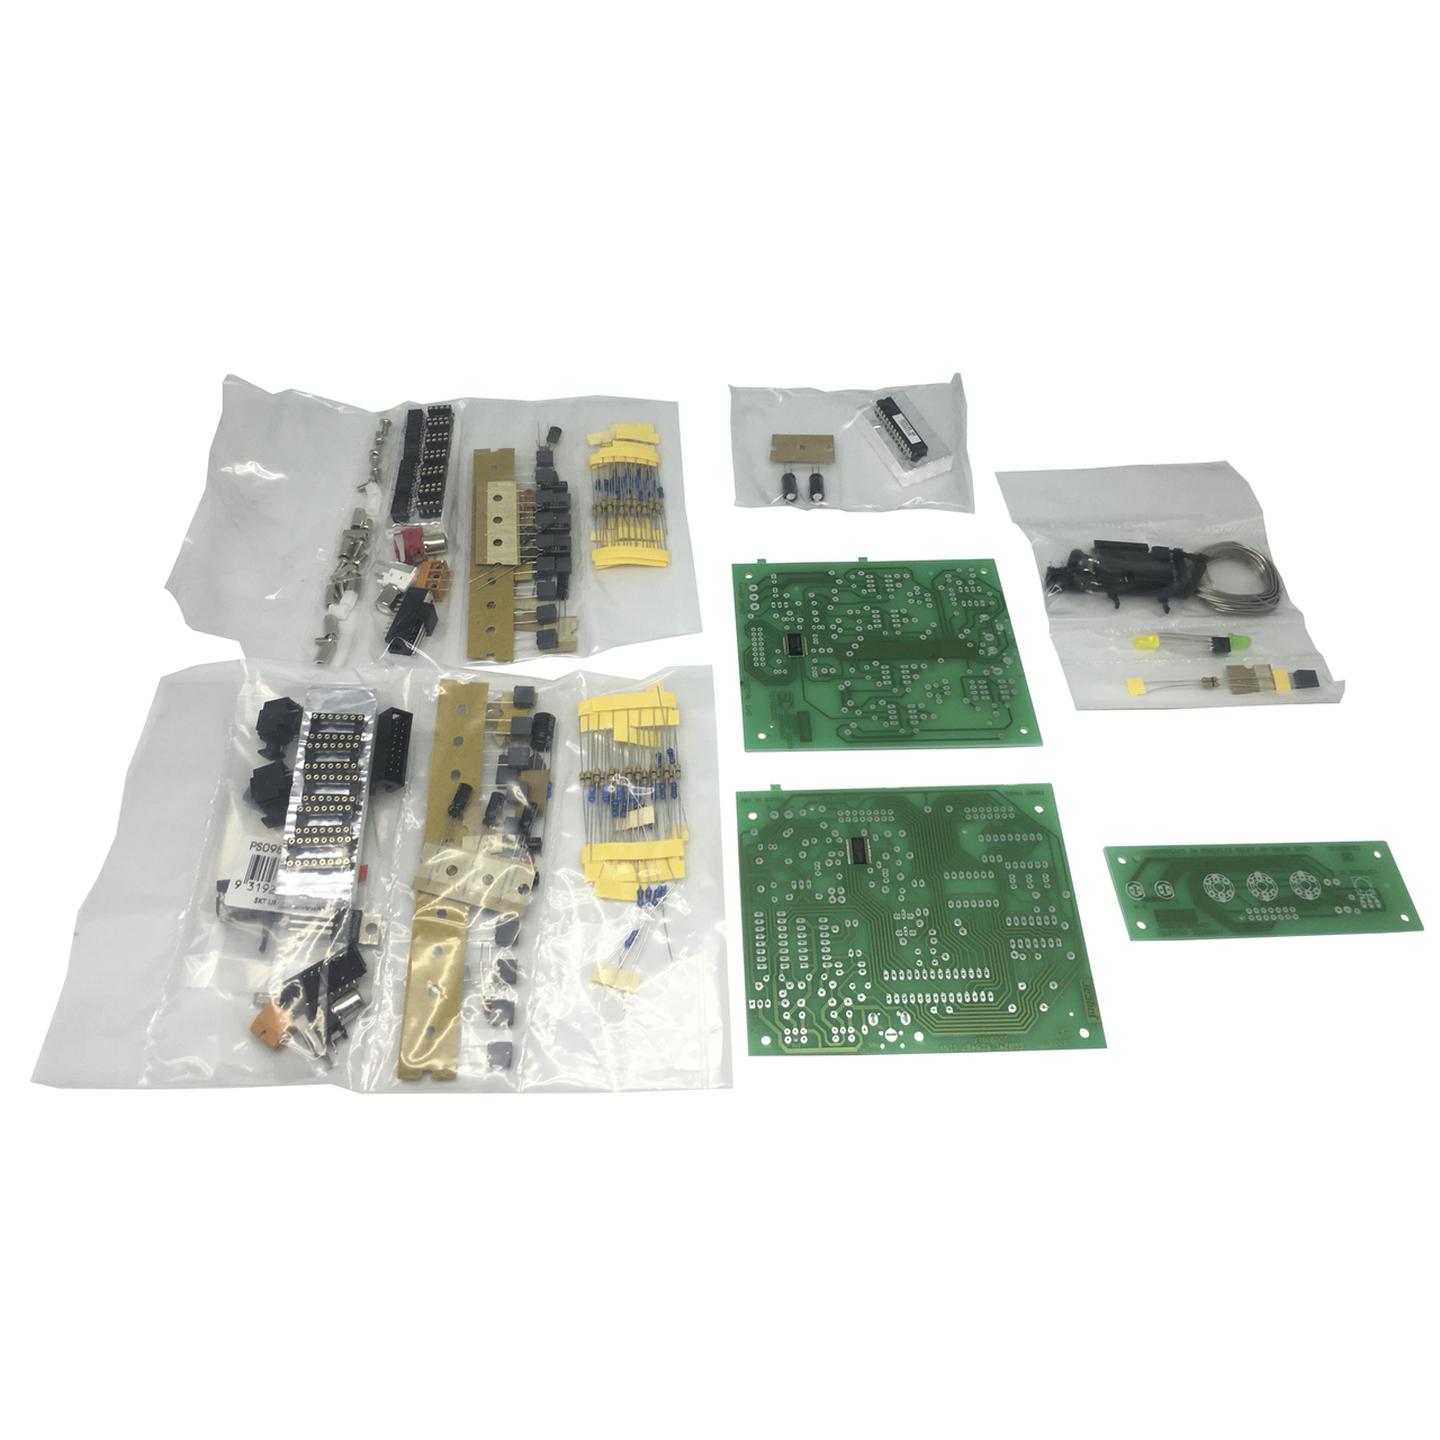 Stereo Digital to Analogue Converter Kit